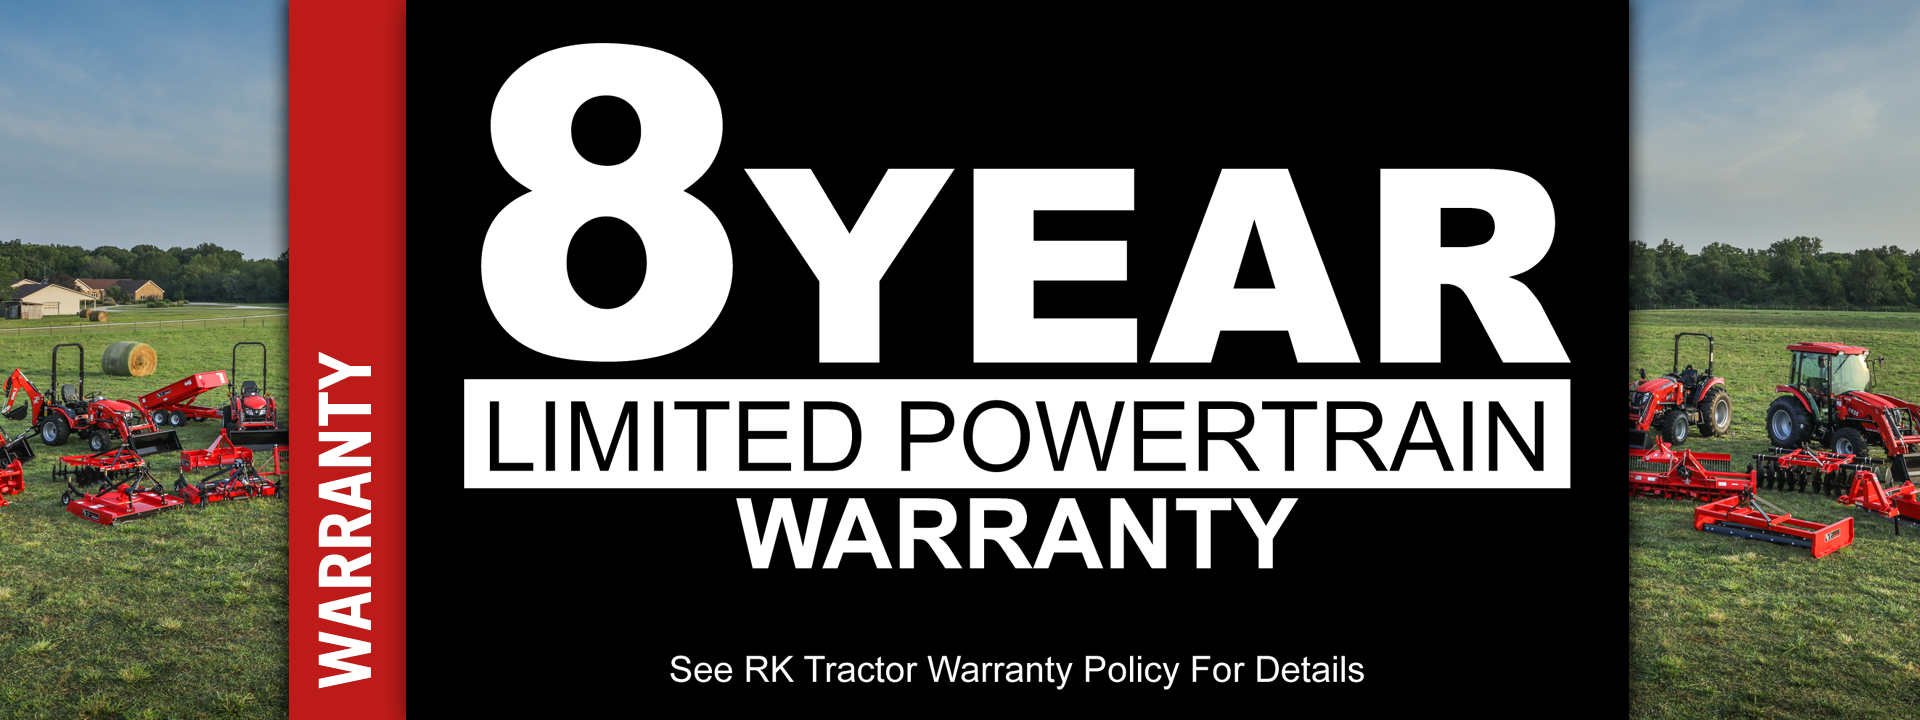 warranty banner